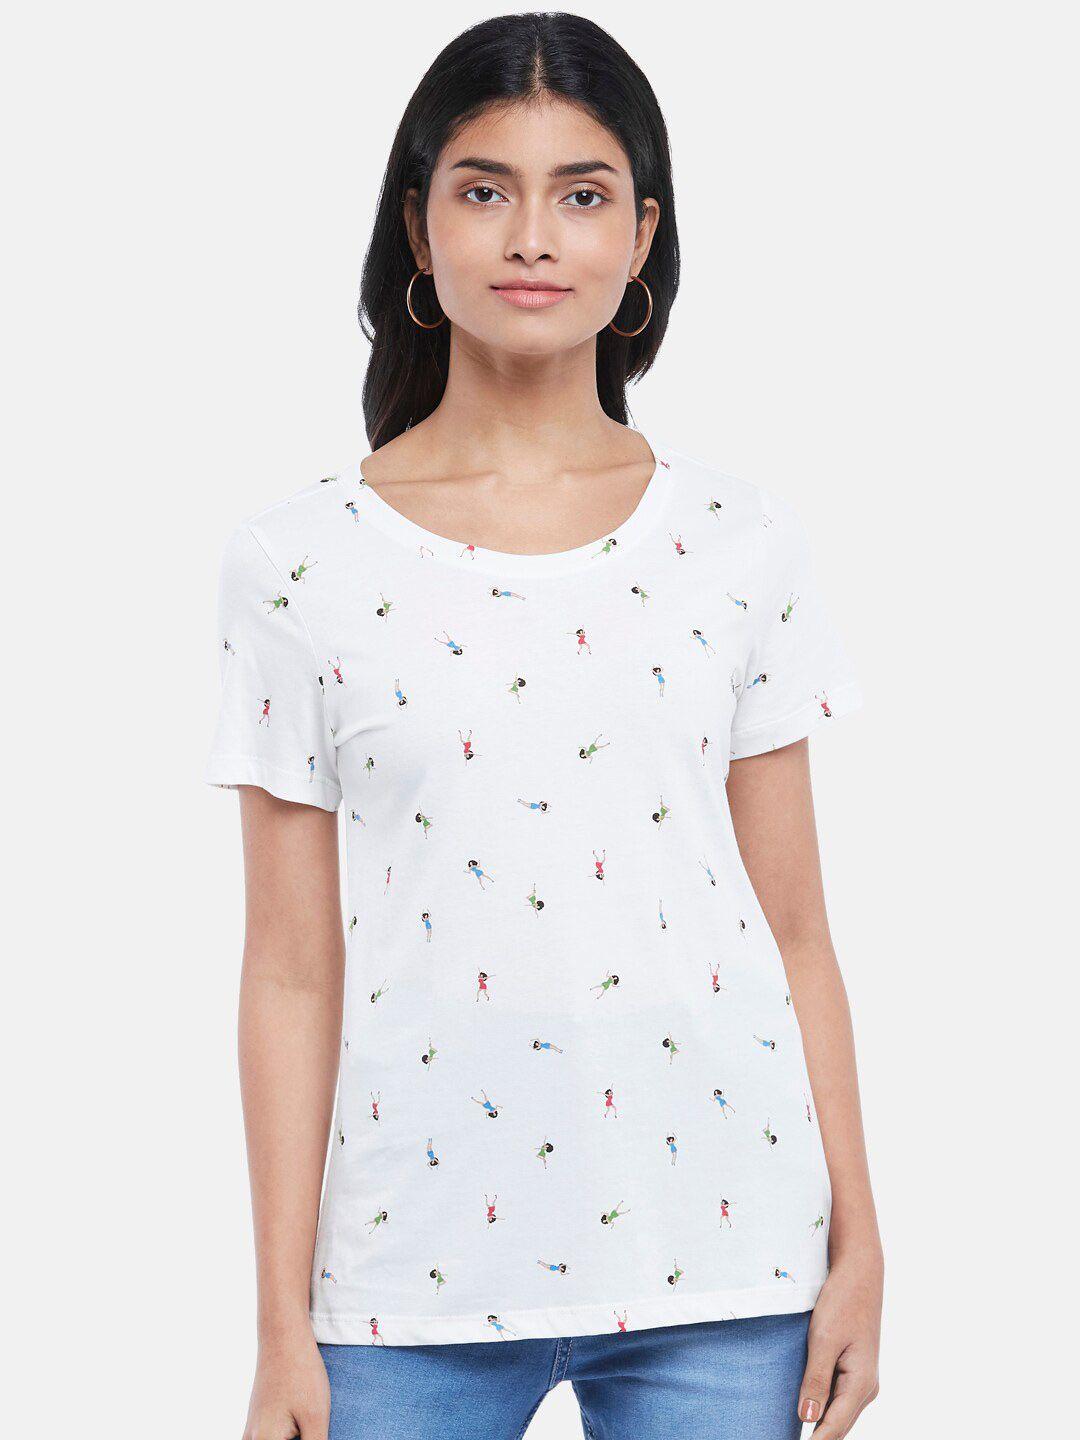 honey-by-pantaloons-women-white-printed-cotton-round-neck-t-shirt